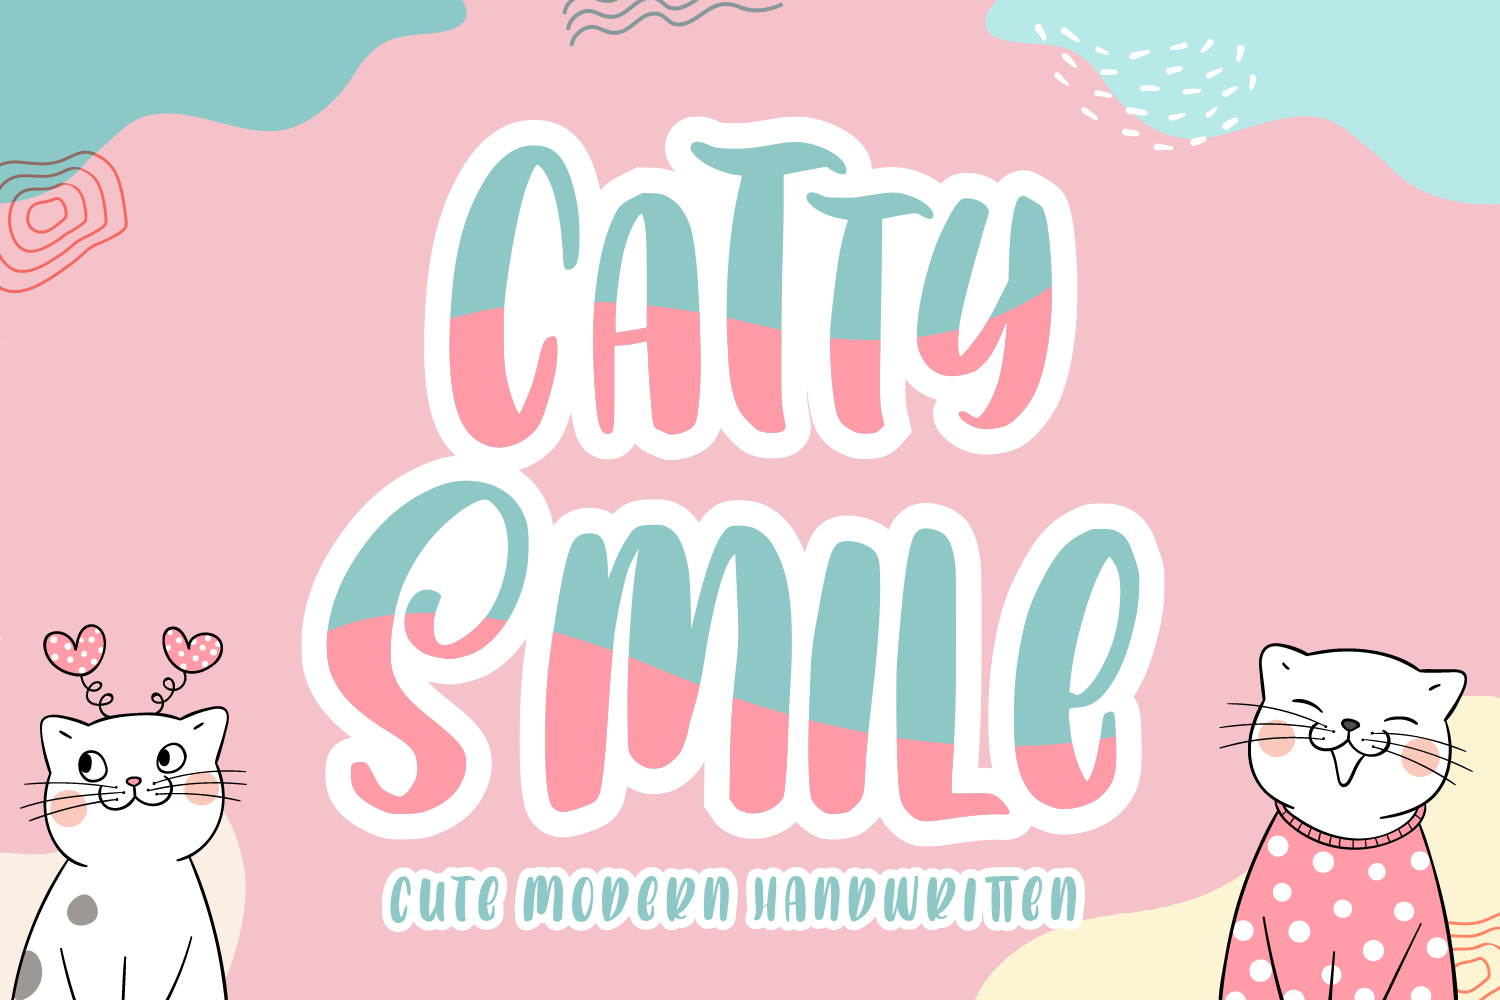 Catty Smile